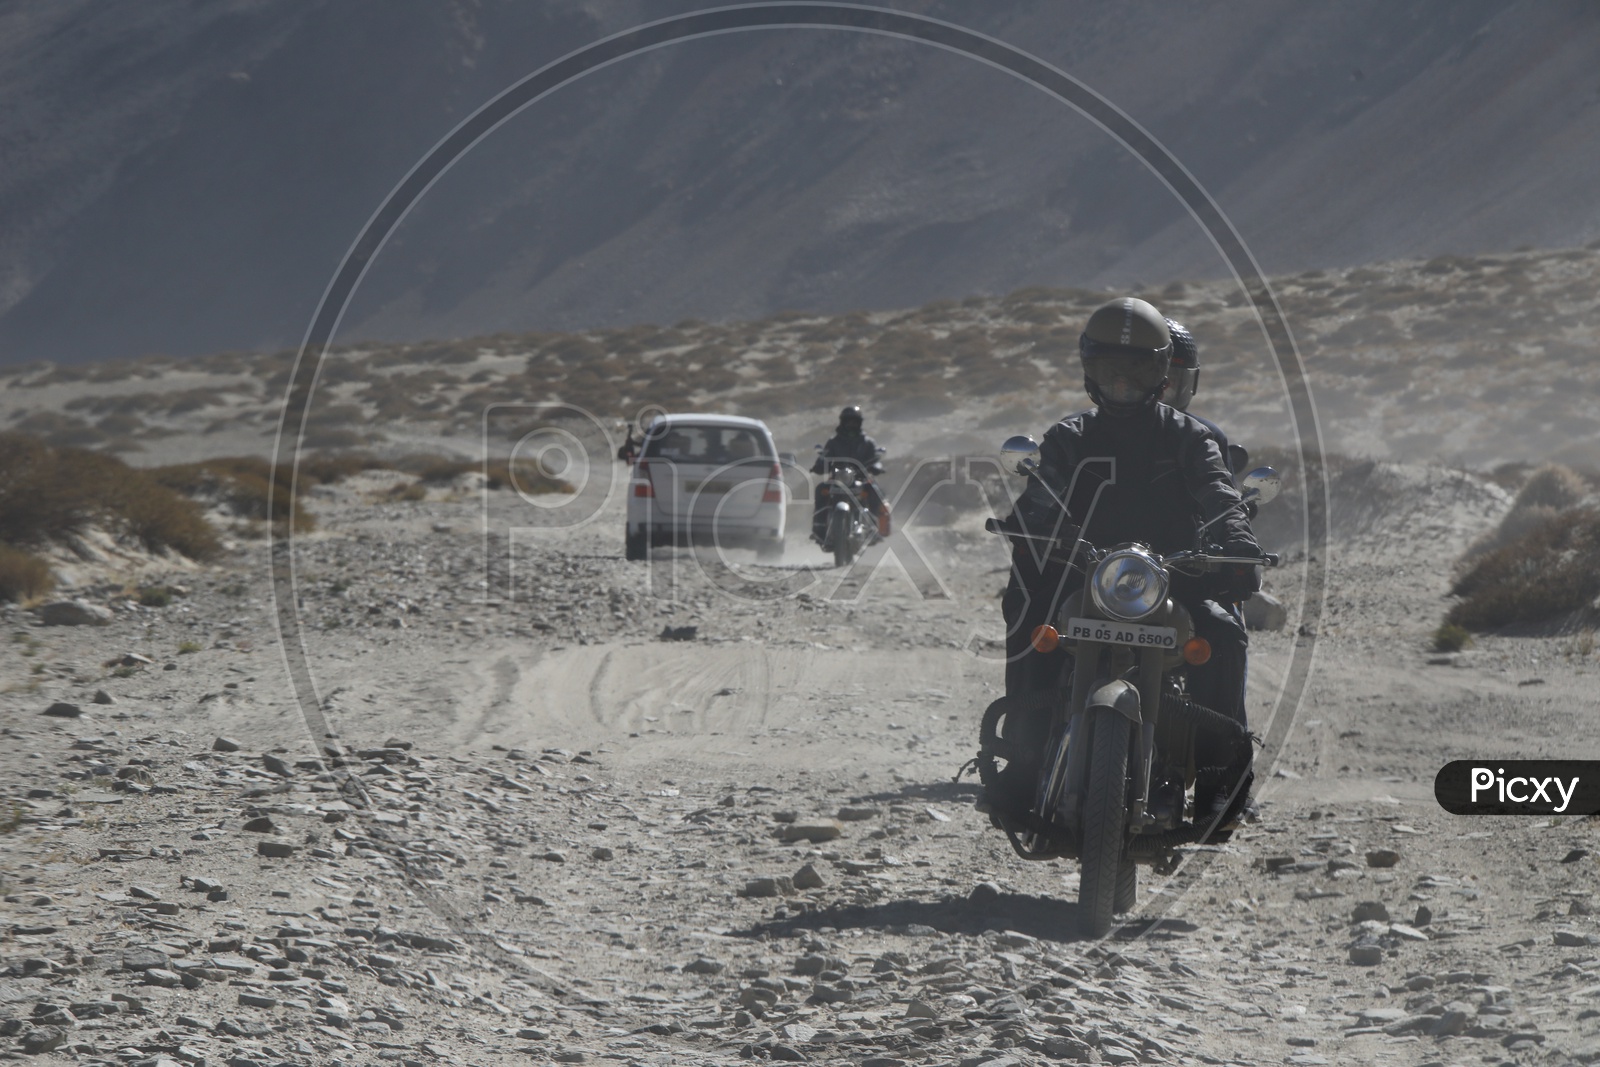 travelers traveling on Leh roads